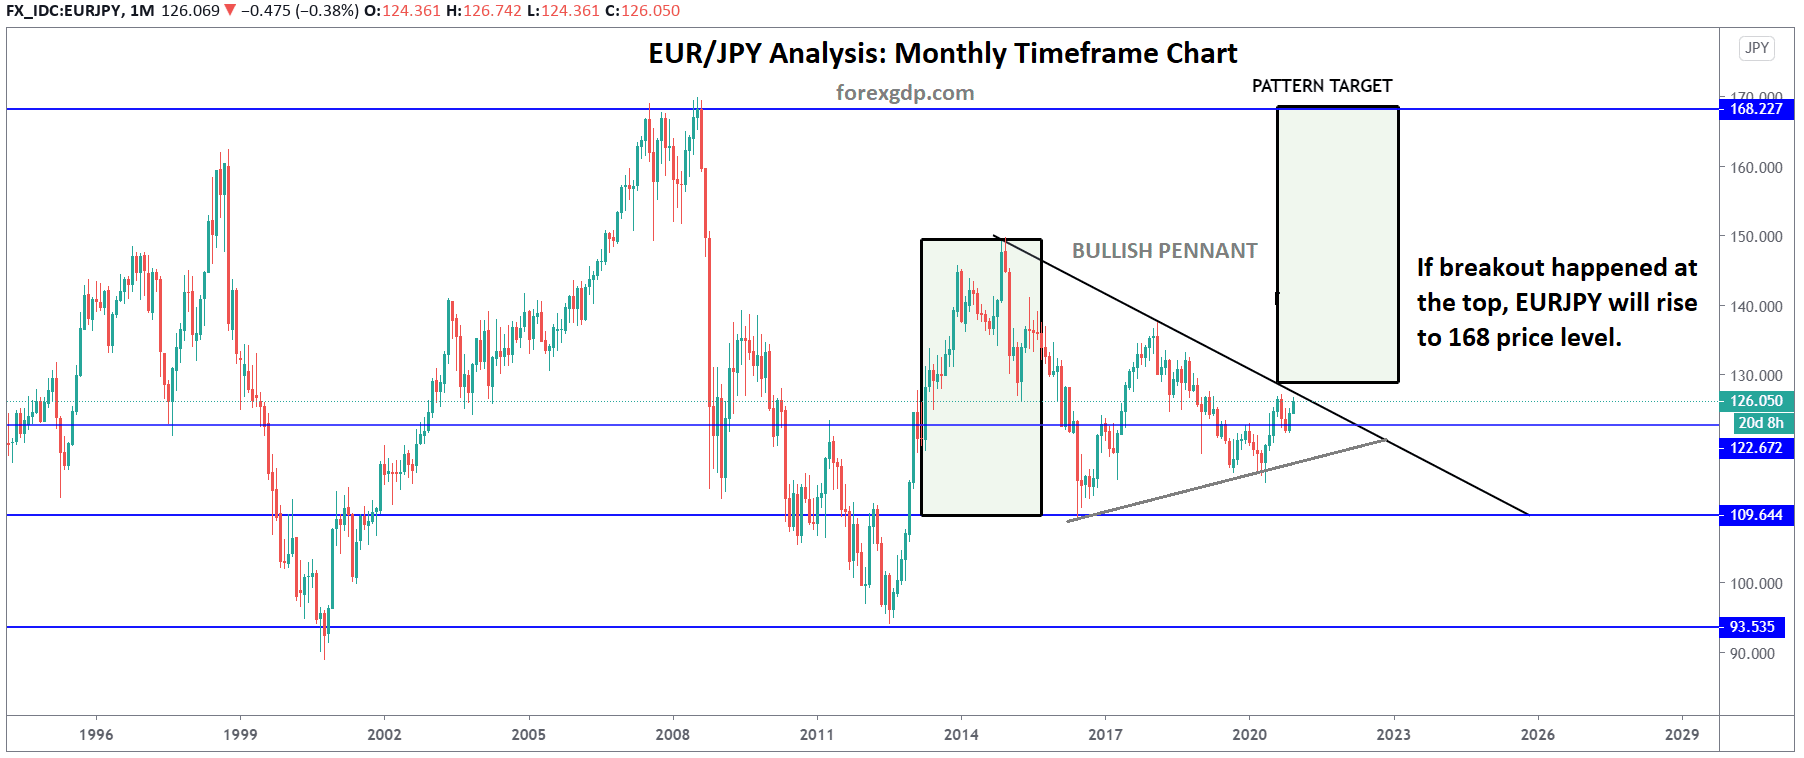 bullish pennant breakout target in eurjpy chart